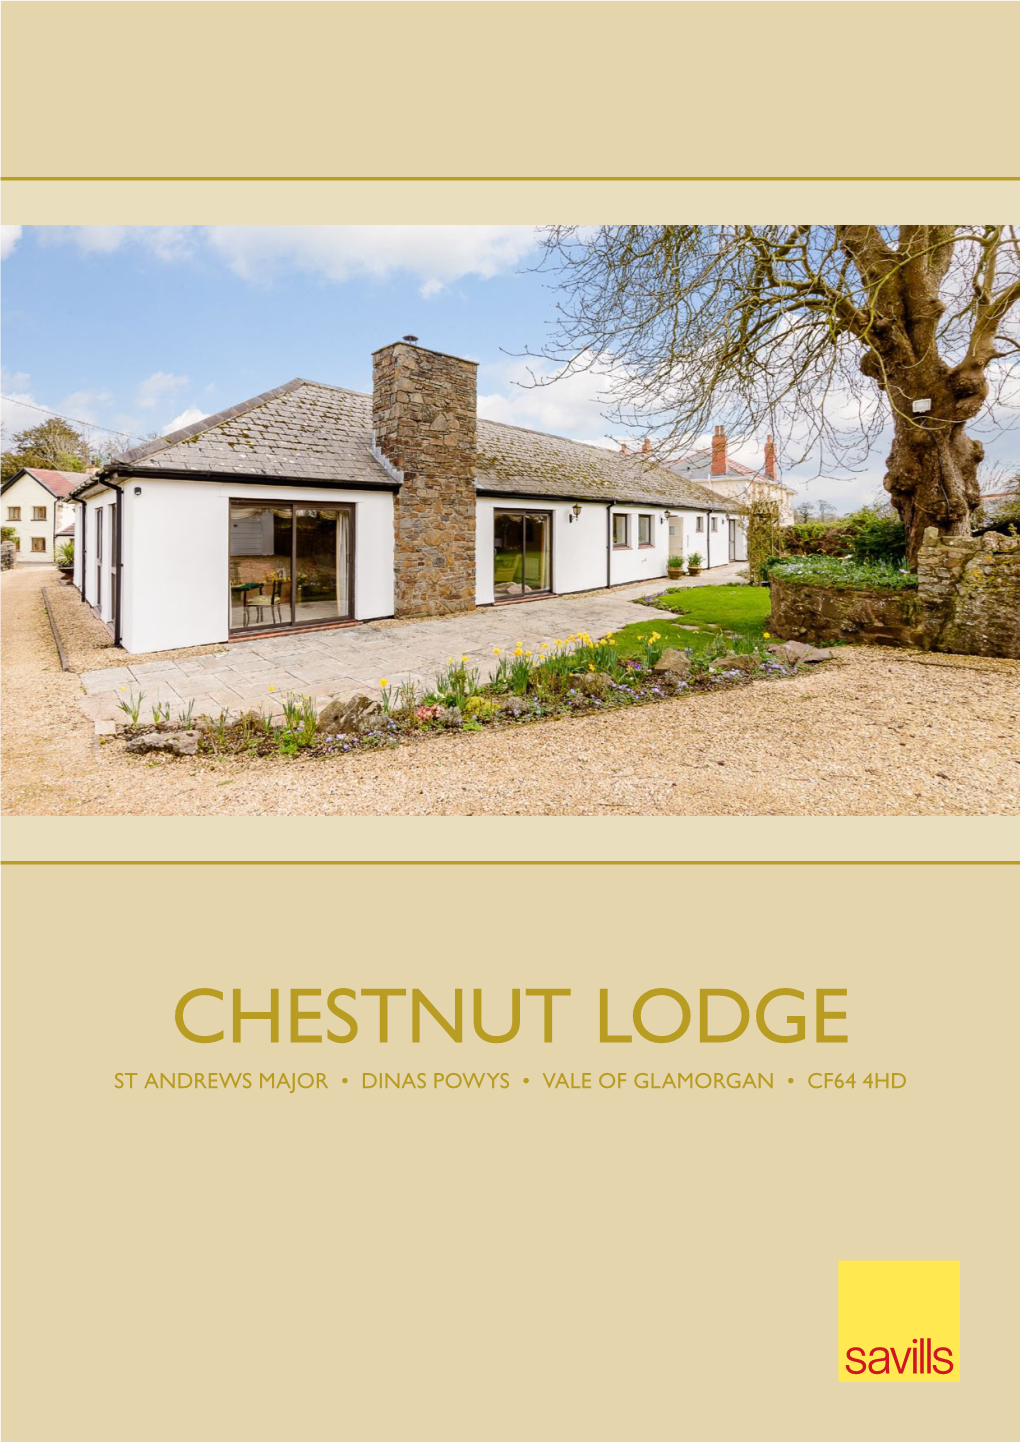 Chestnut Lodge St Andrews Major • Dinas Powys • Vale of Glamorgan • CF64 4HD Chestnut Lodge St Andrews Major • Dinas Powys Vale of Glamorgan • CF64 4HD